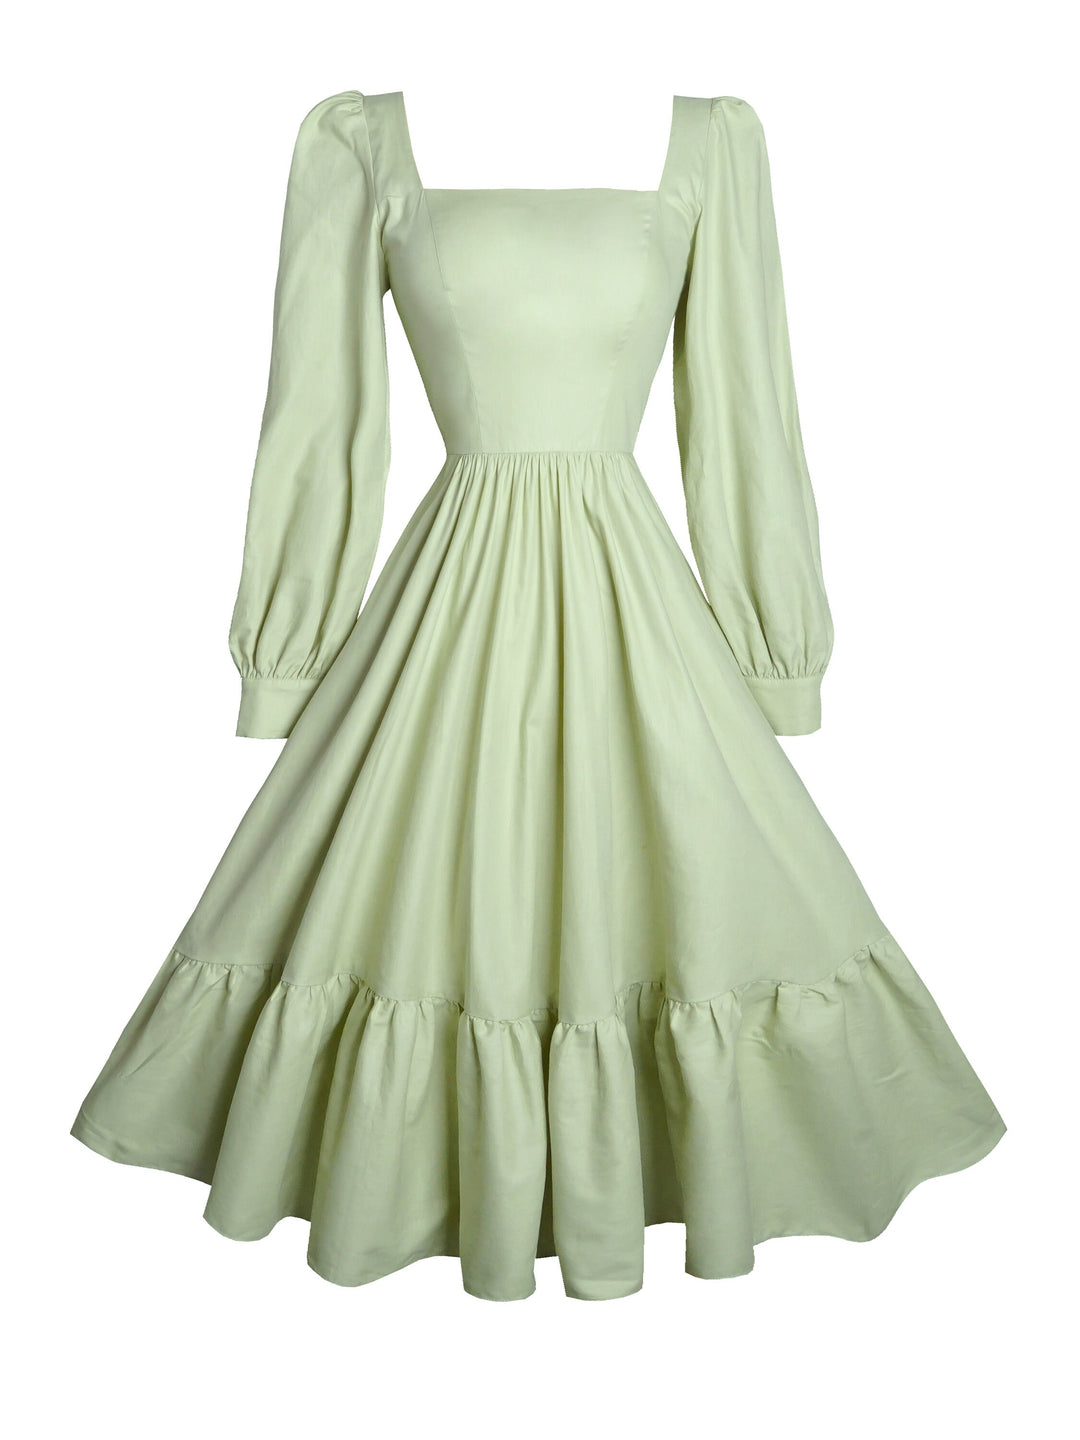 MTO - Mary Dress in Melon Green Cotton